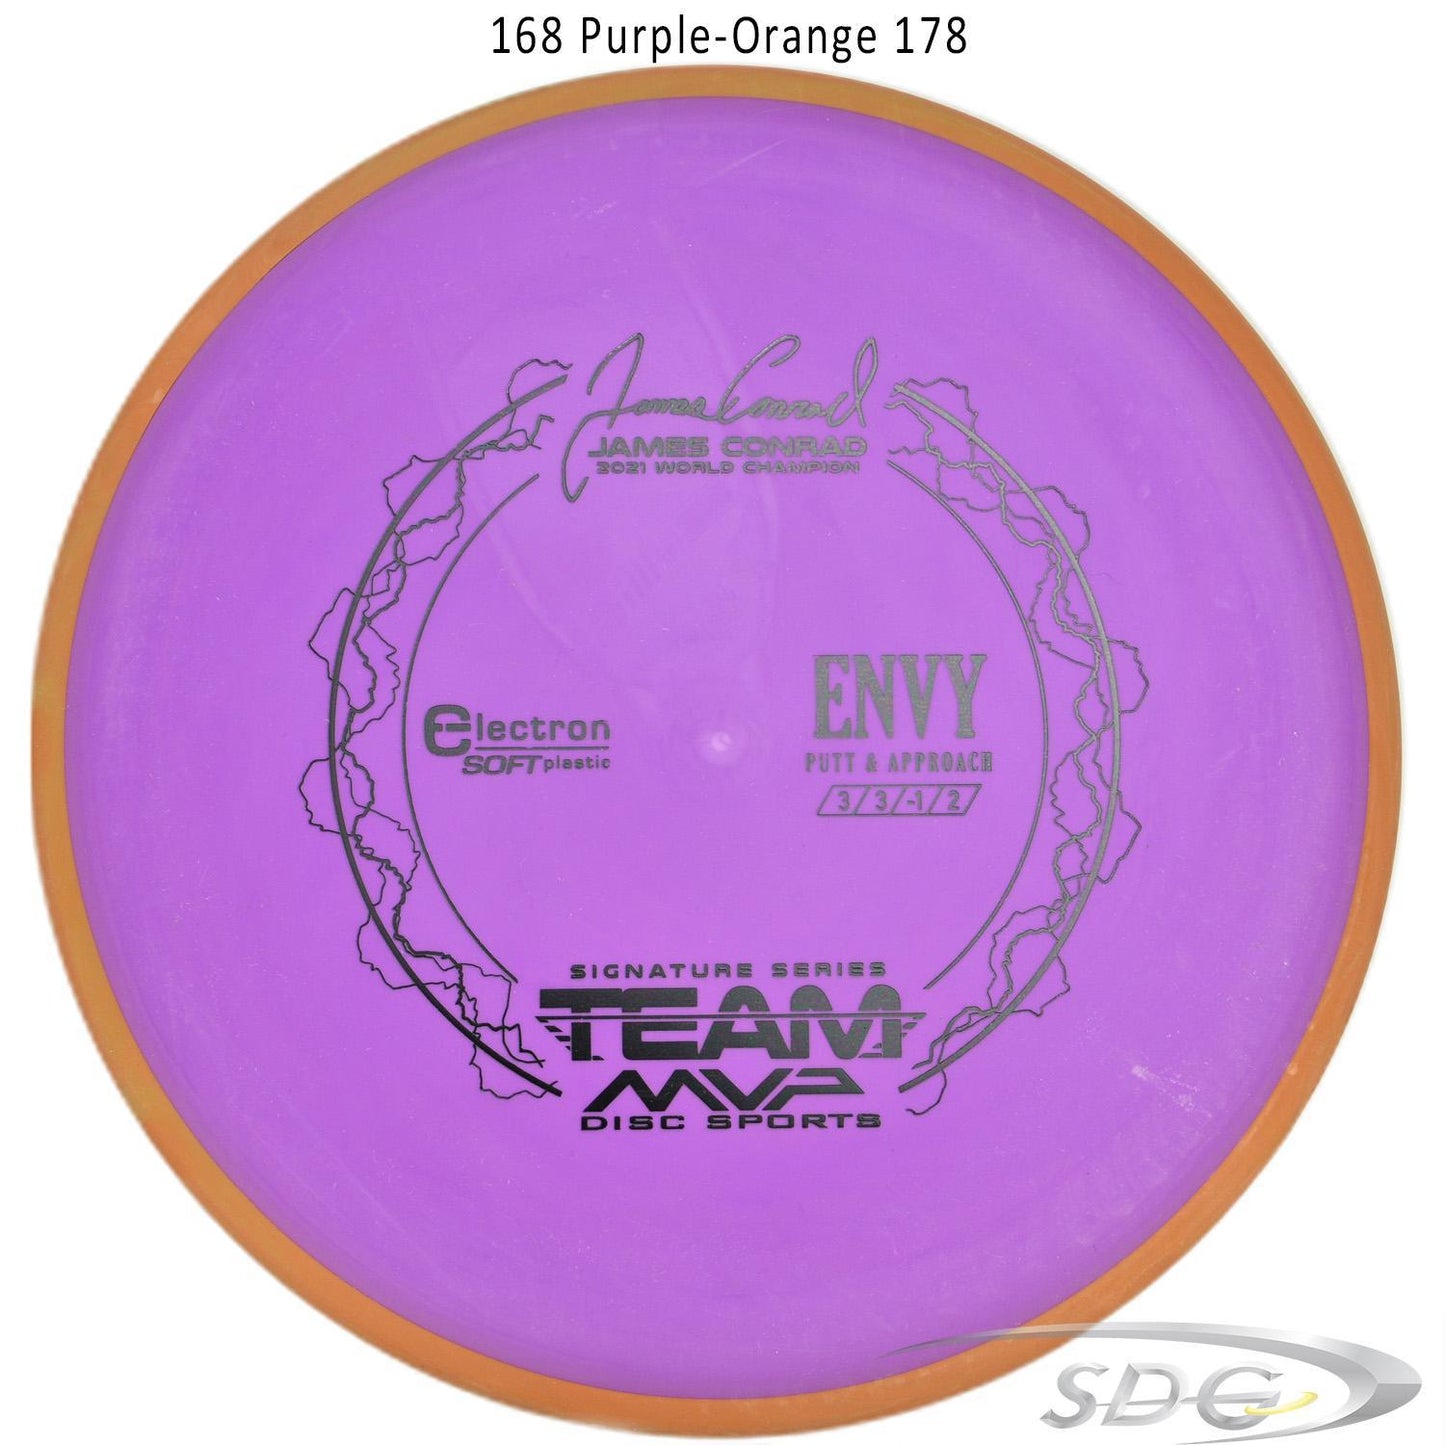 axiom-electron-envy-soft-james-conrad-signature-series-disc-golf-putter 168 Purple-Orange 178 